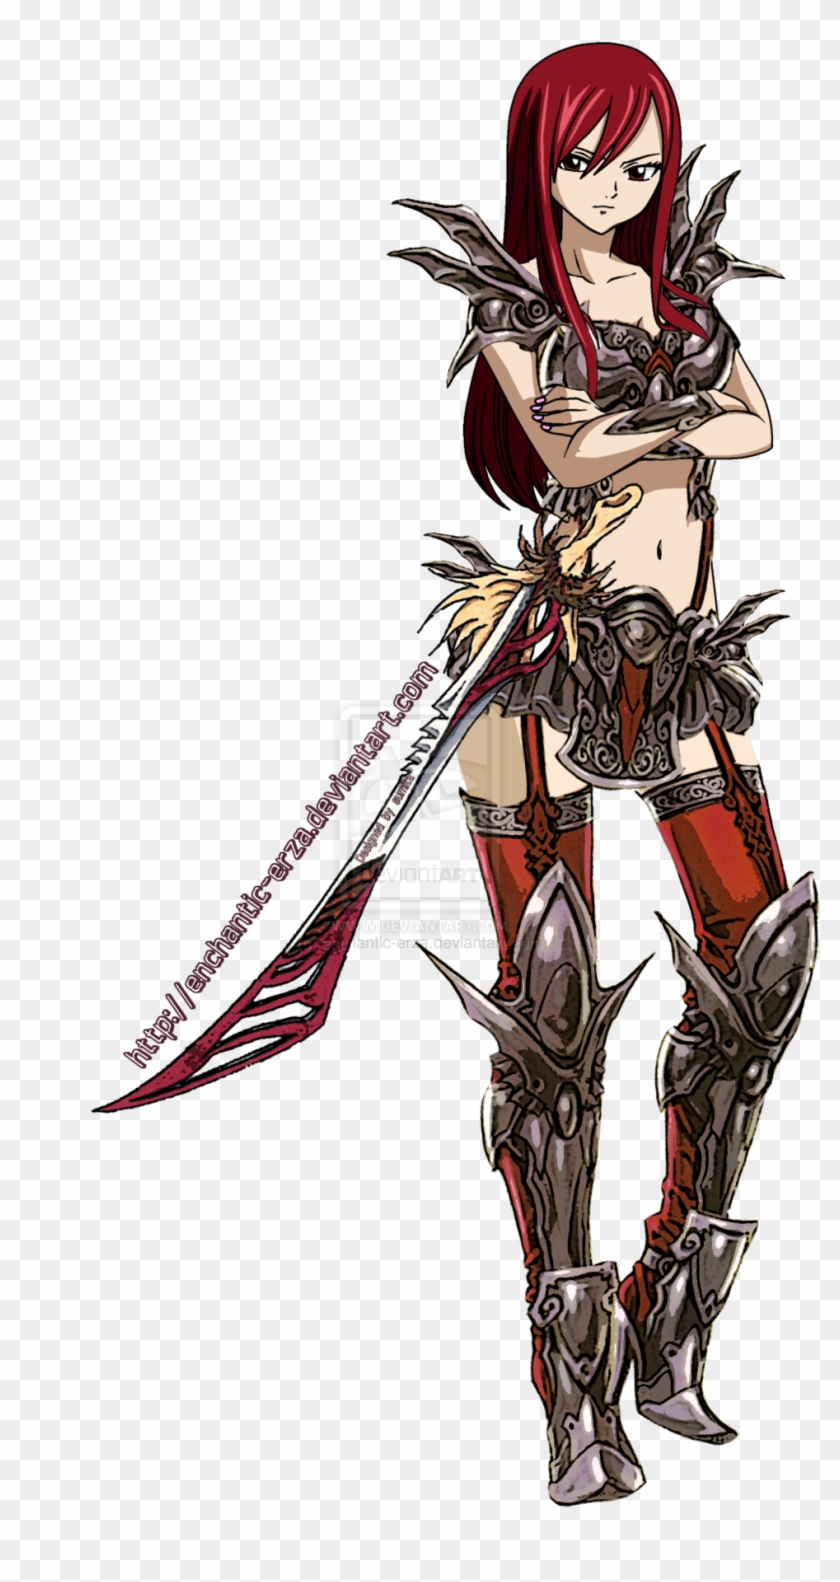 Fairy Tail Erza Scarlet Armor - Erza Scarlet Armor Clipart #4742517